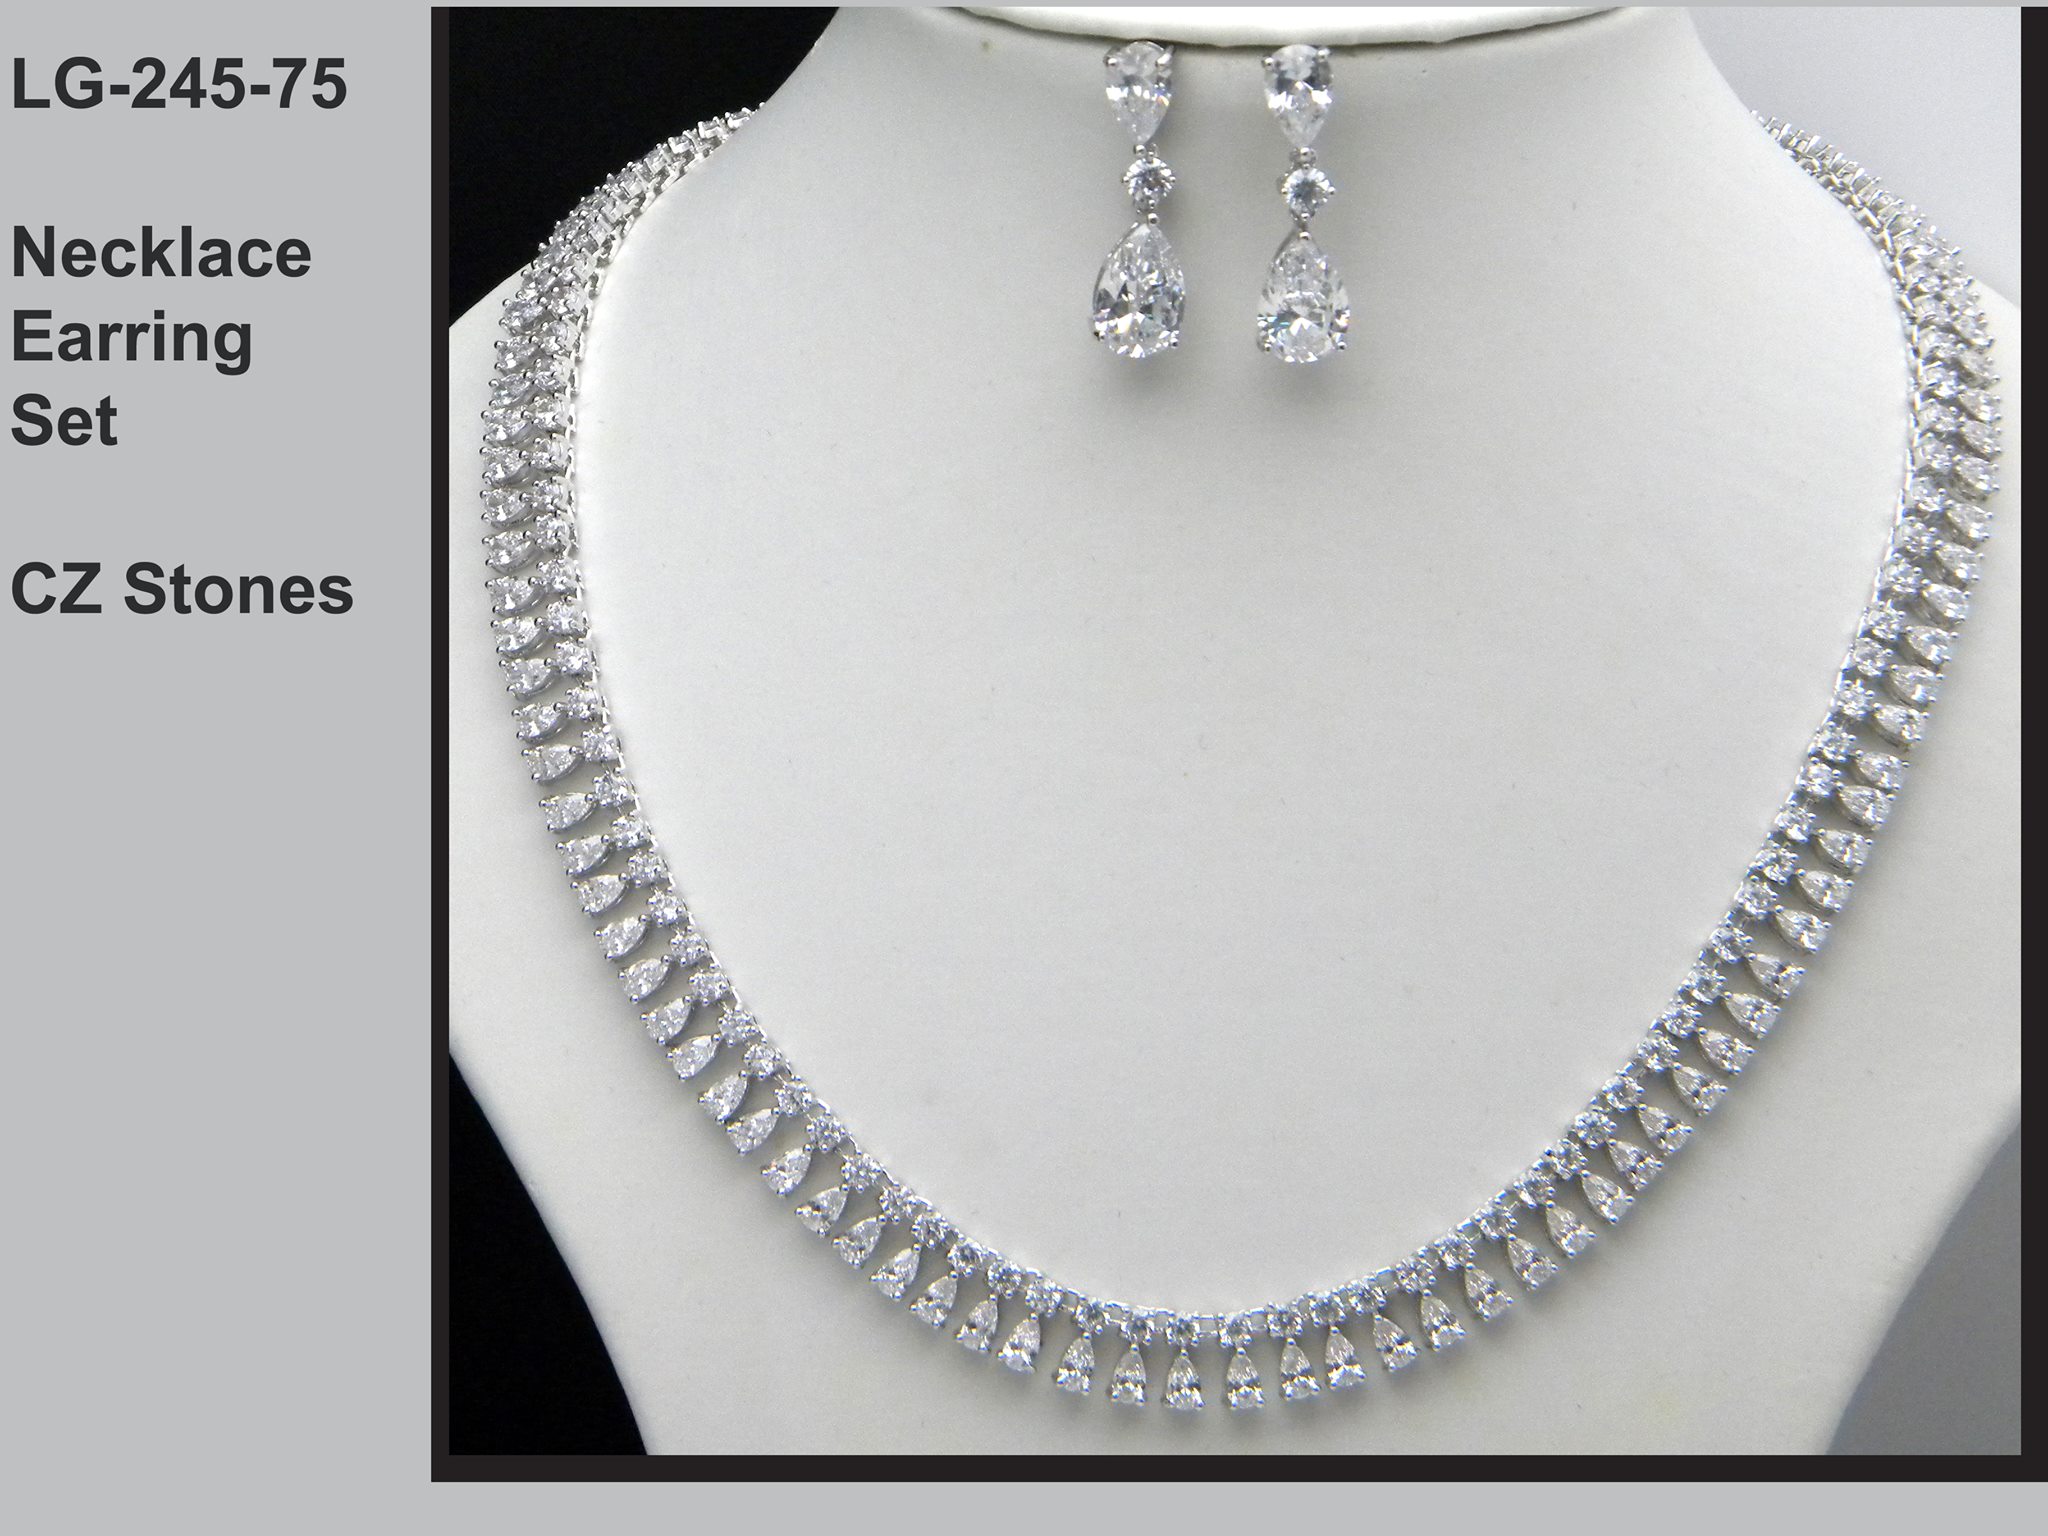 Jewelry Style No. LG 245